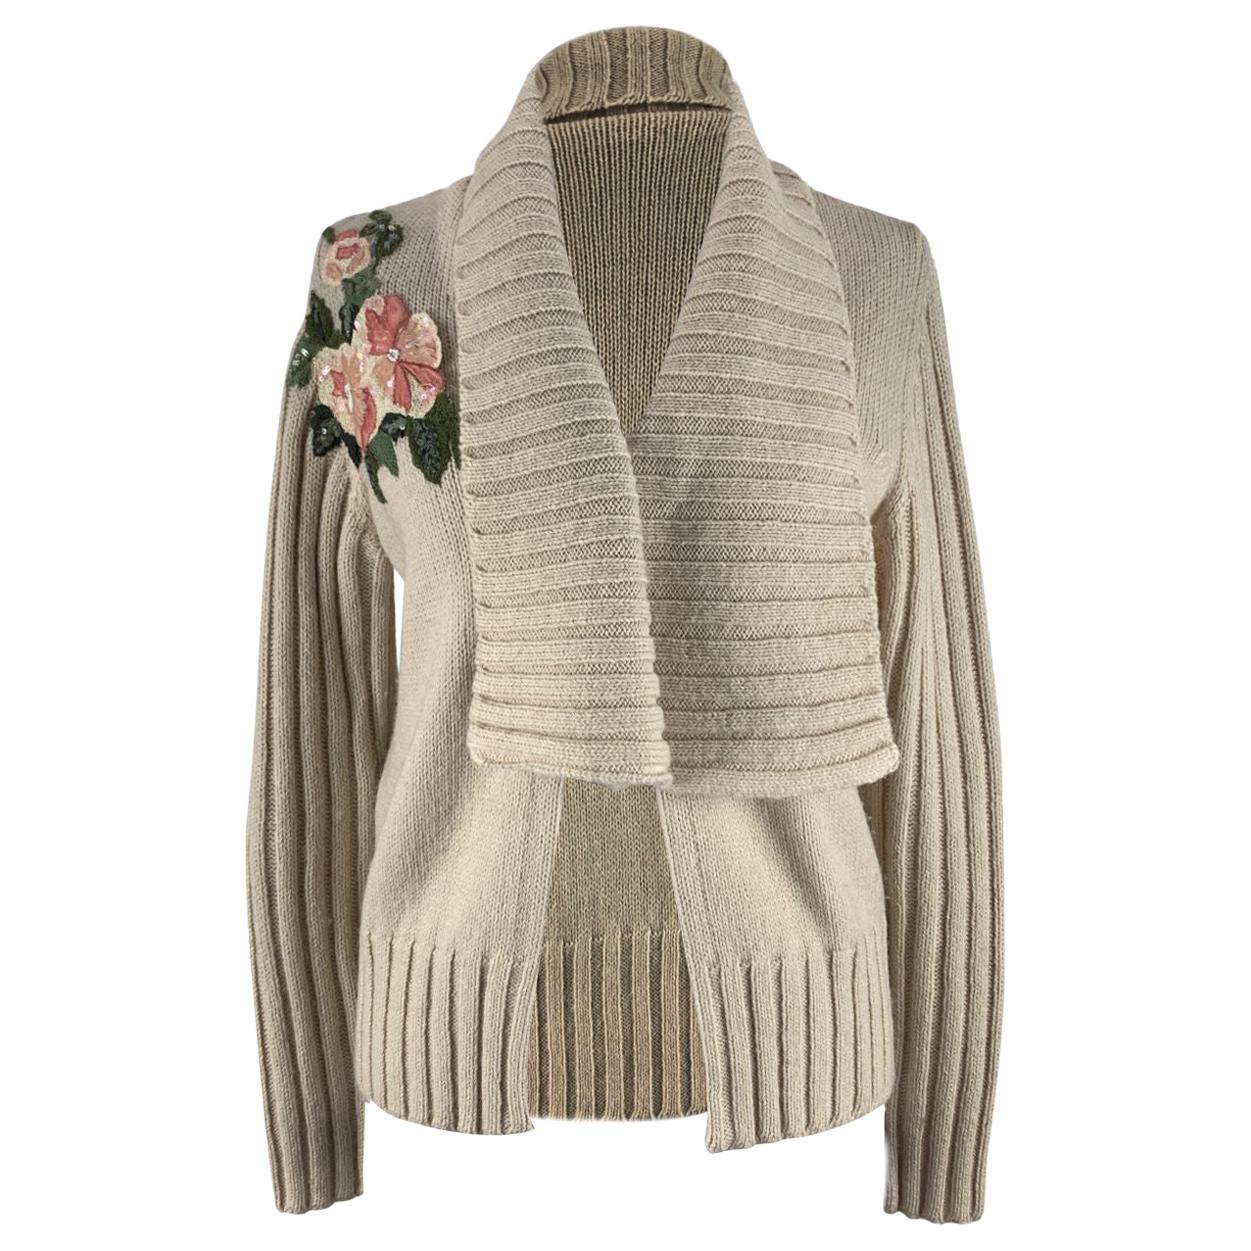 Blumarine Blugirl Wool Blend Cardigan with Floral Applique Size 46 IT